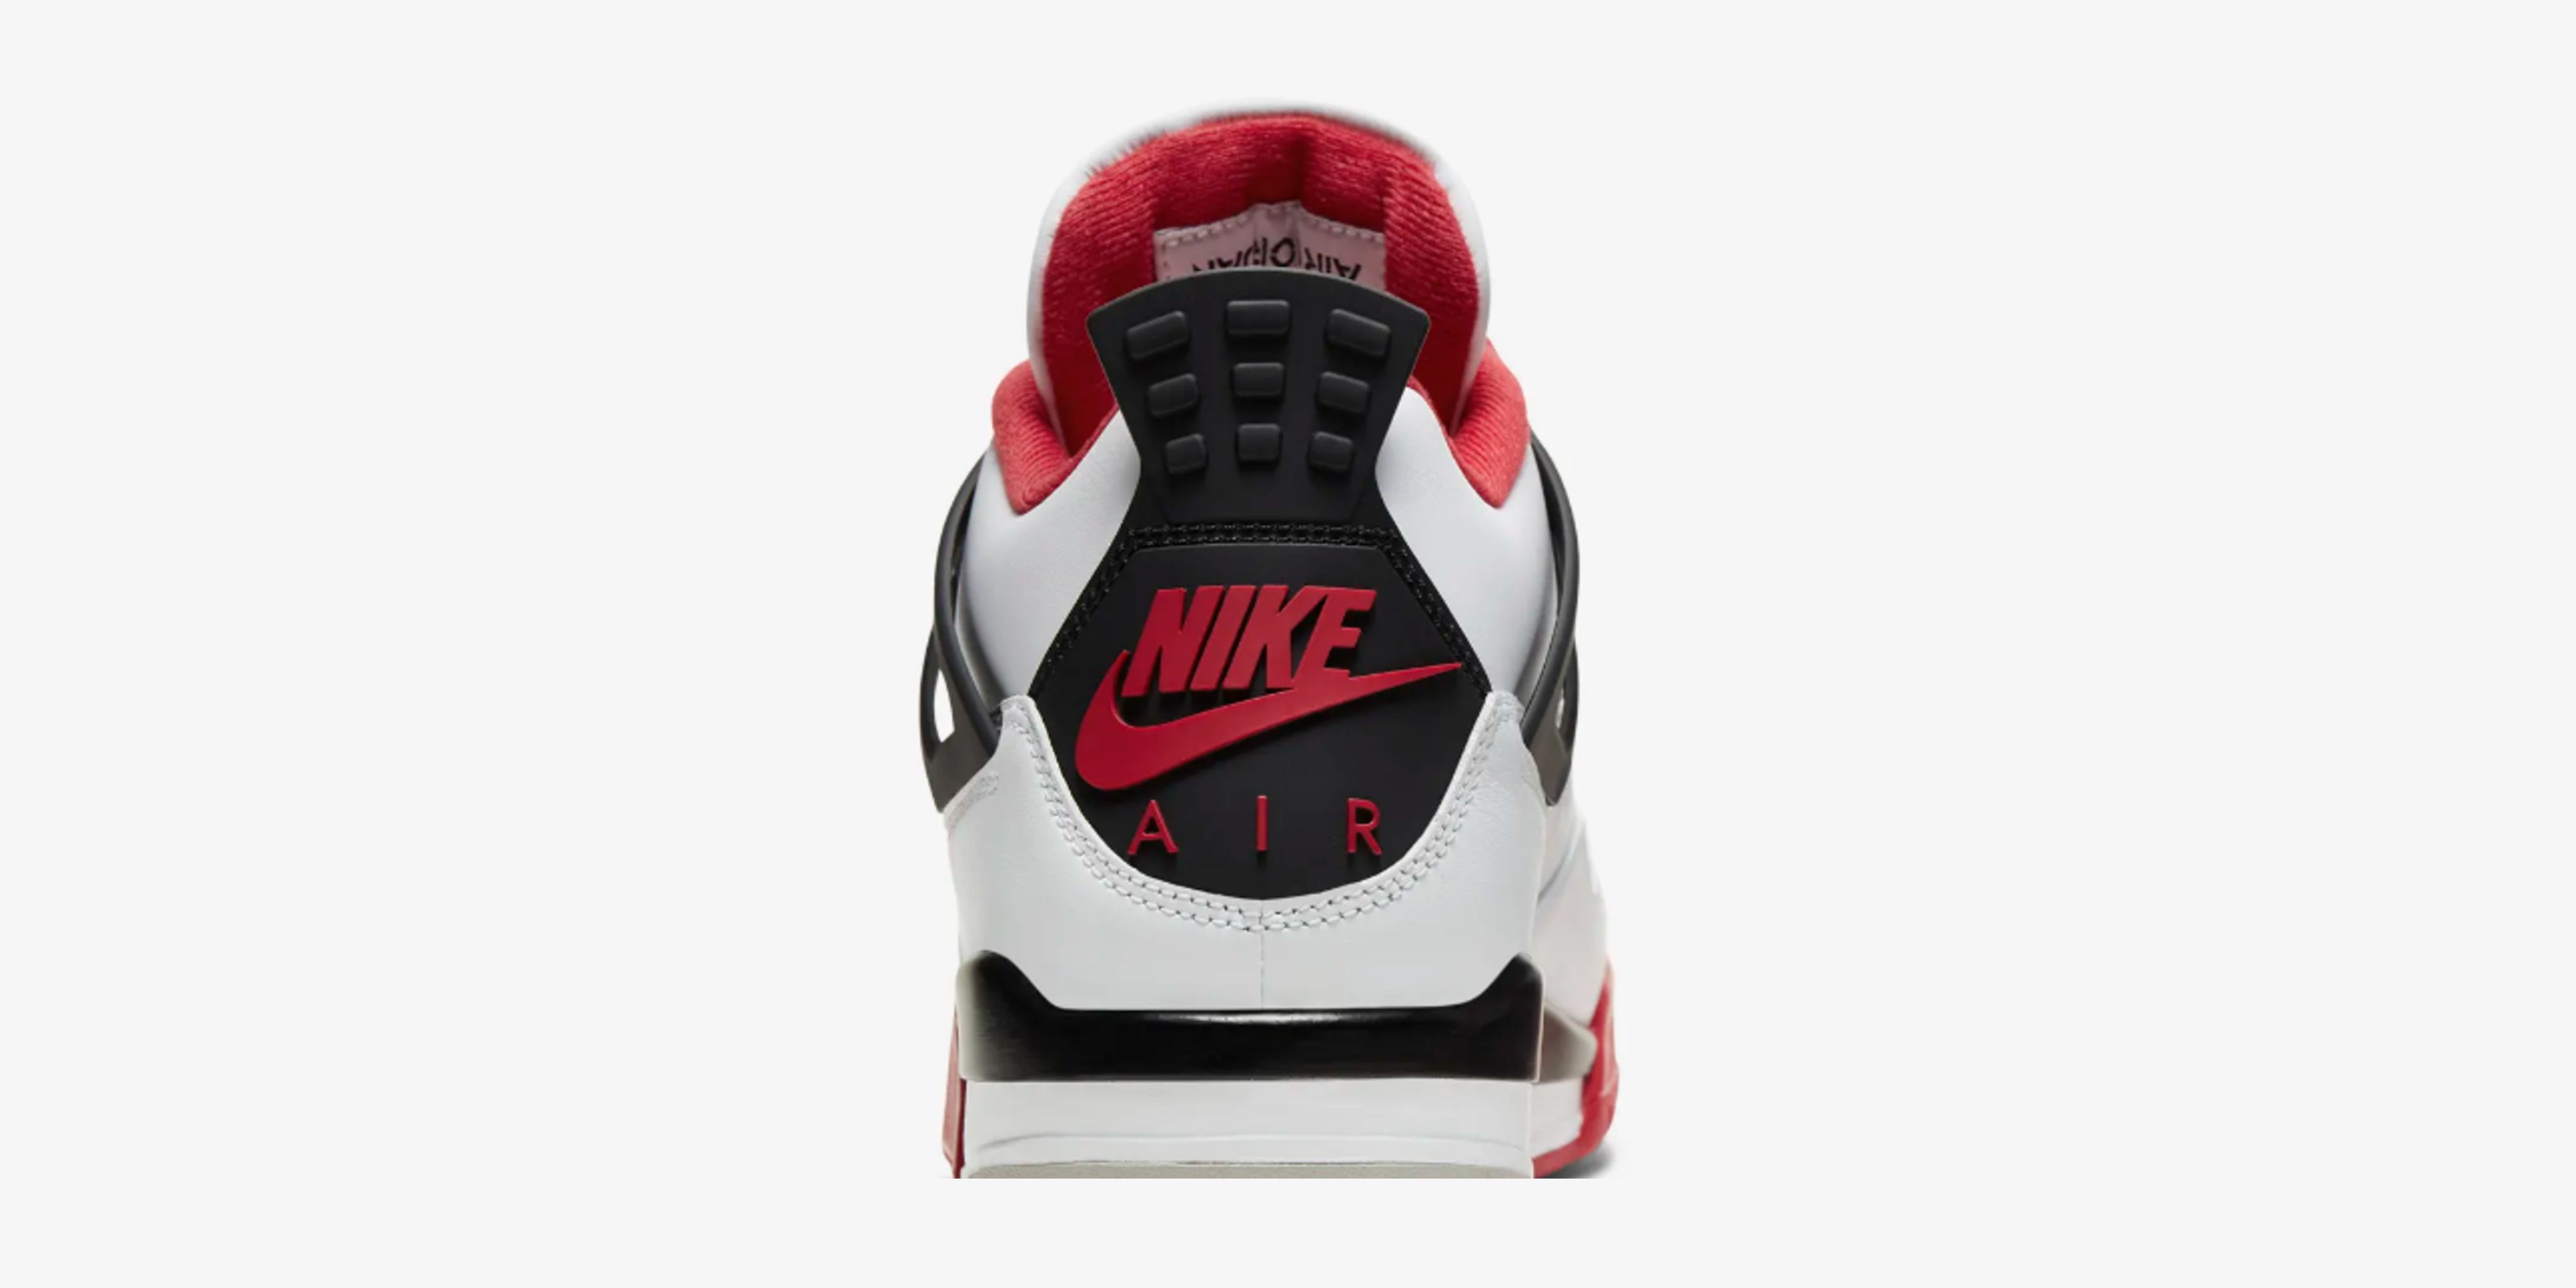 Zapatillas Nike Air Jordan Fire - Precio características